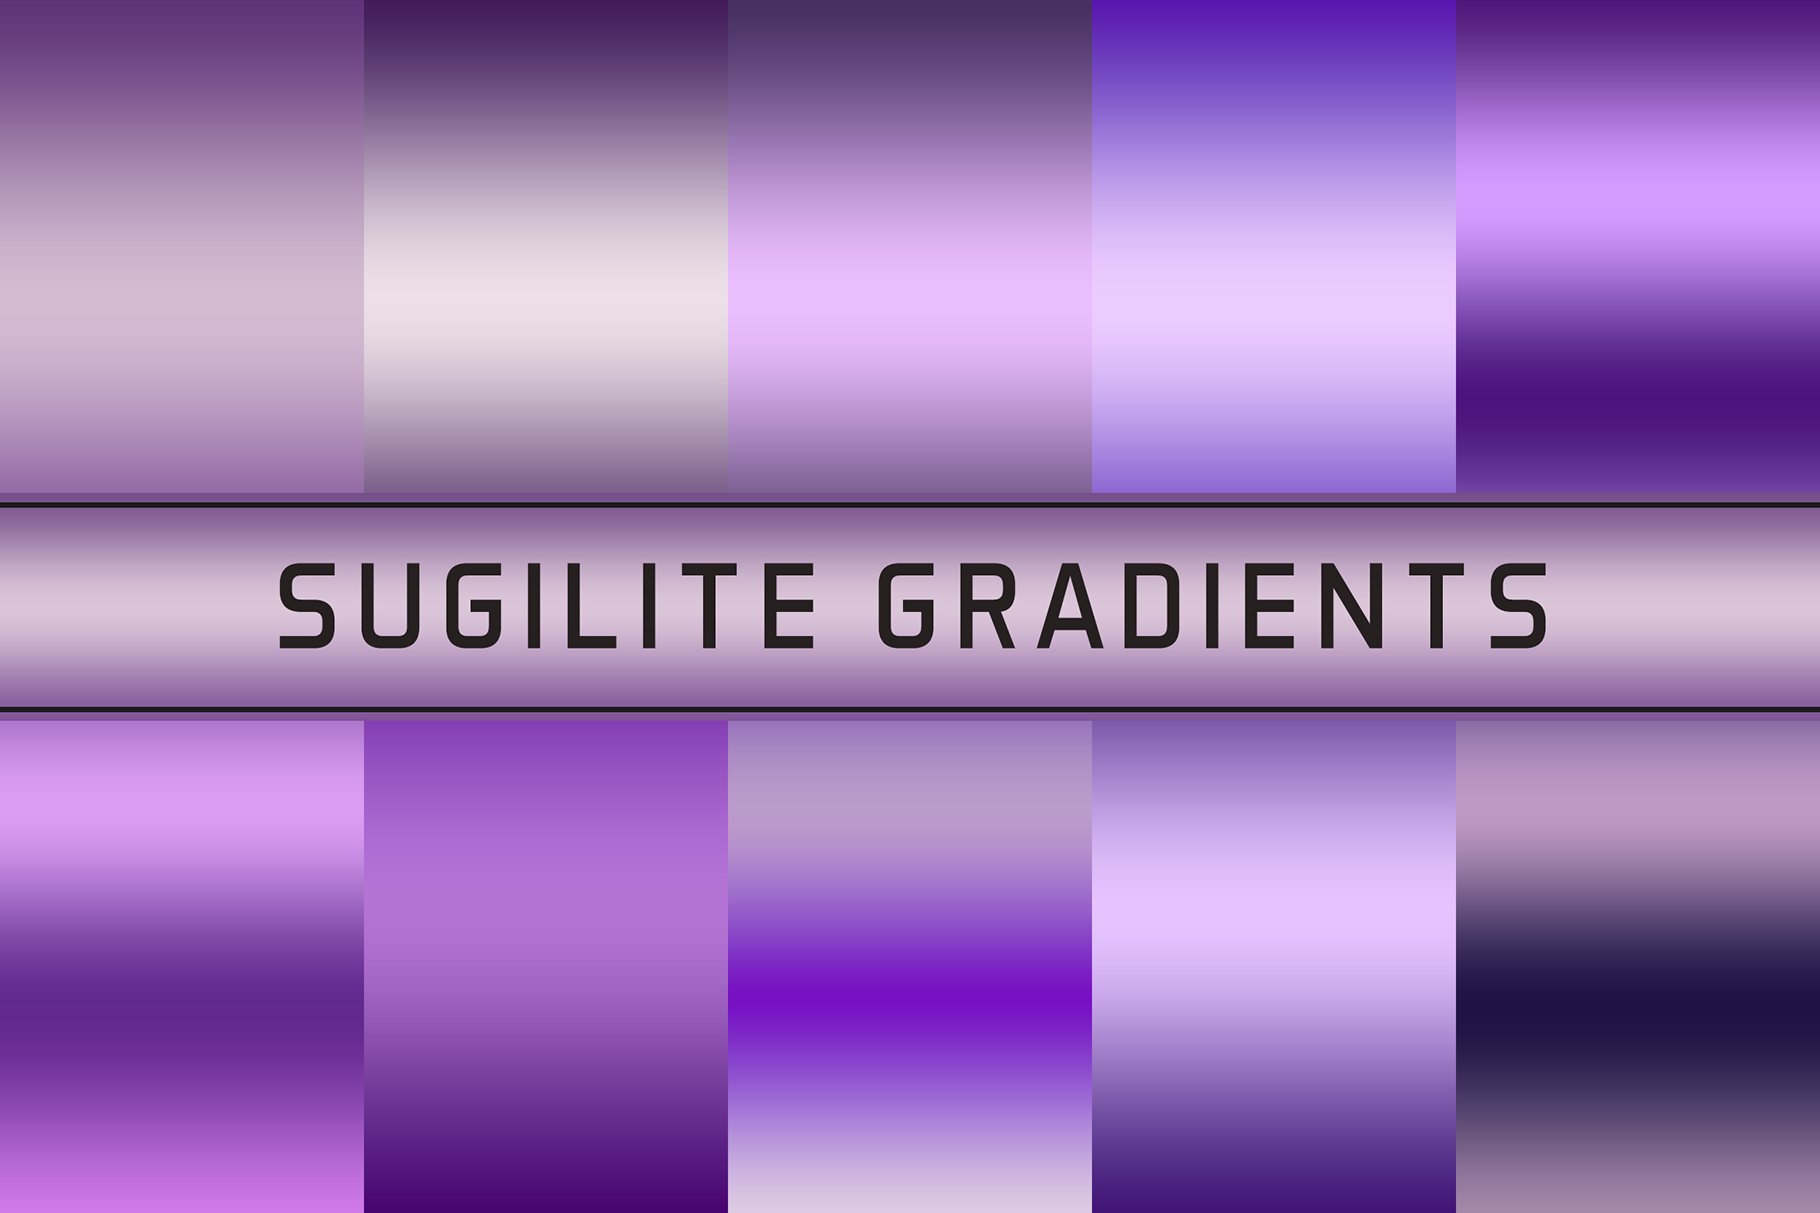 Sugilite Gradients cover image.